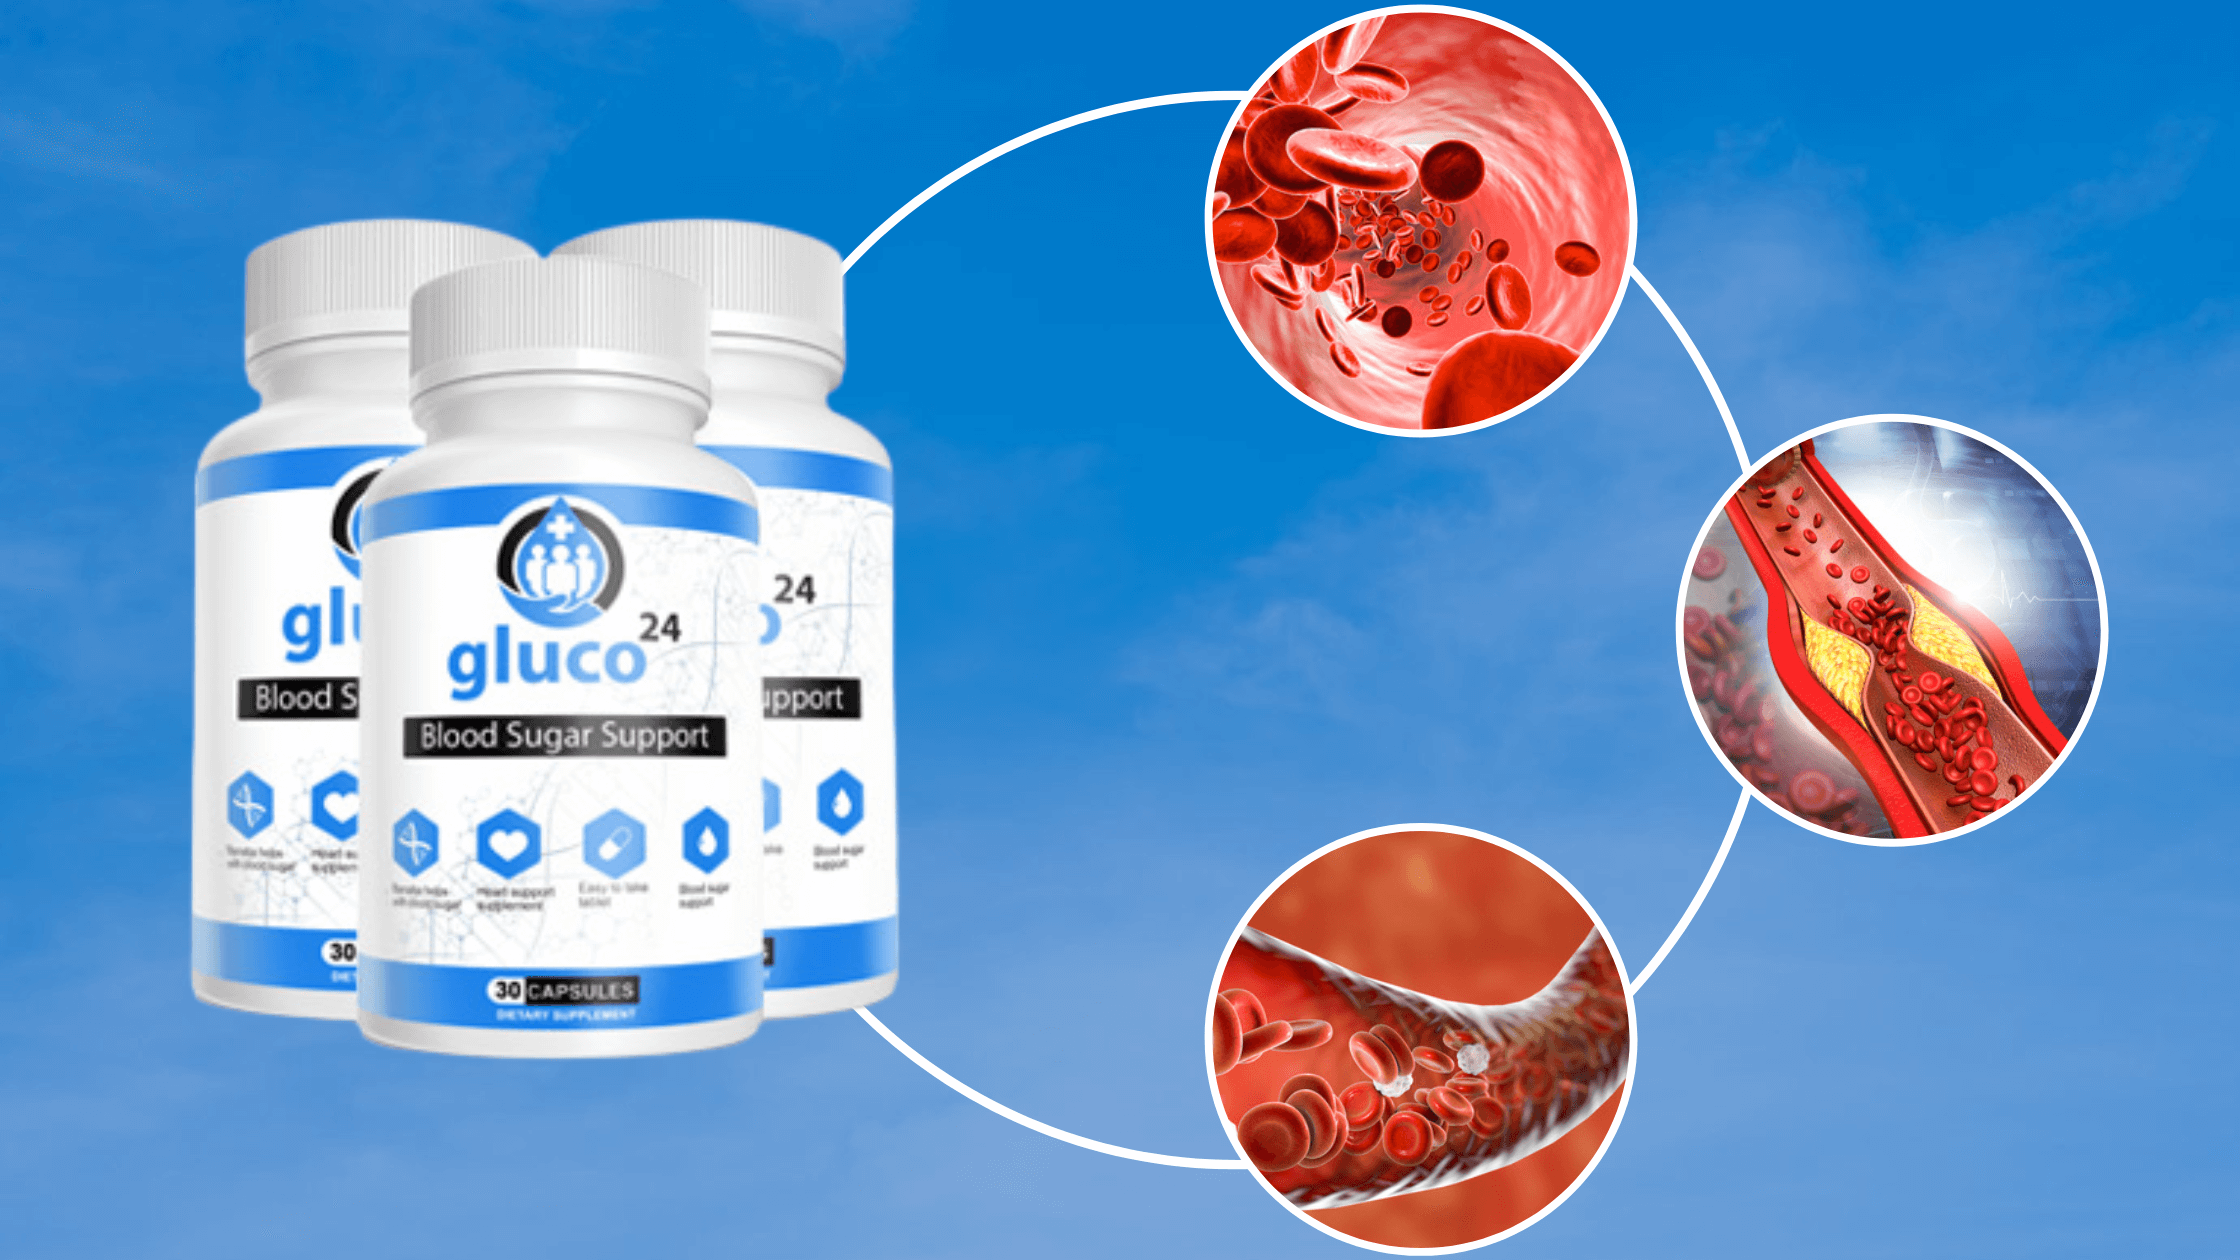 Gluco24 Blood Sugar Support Formula